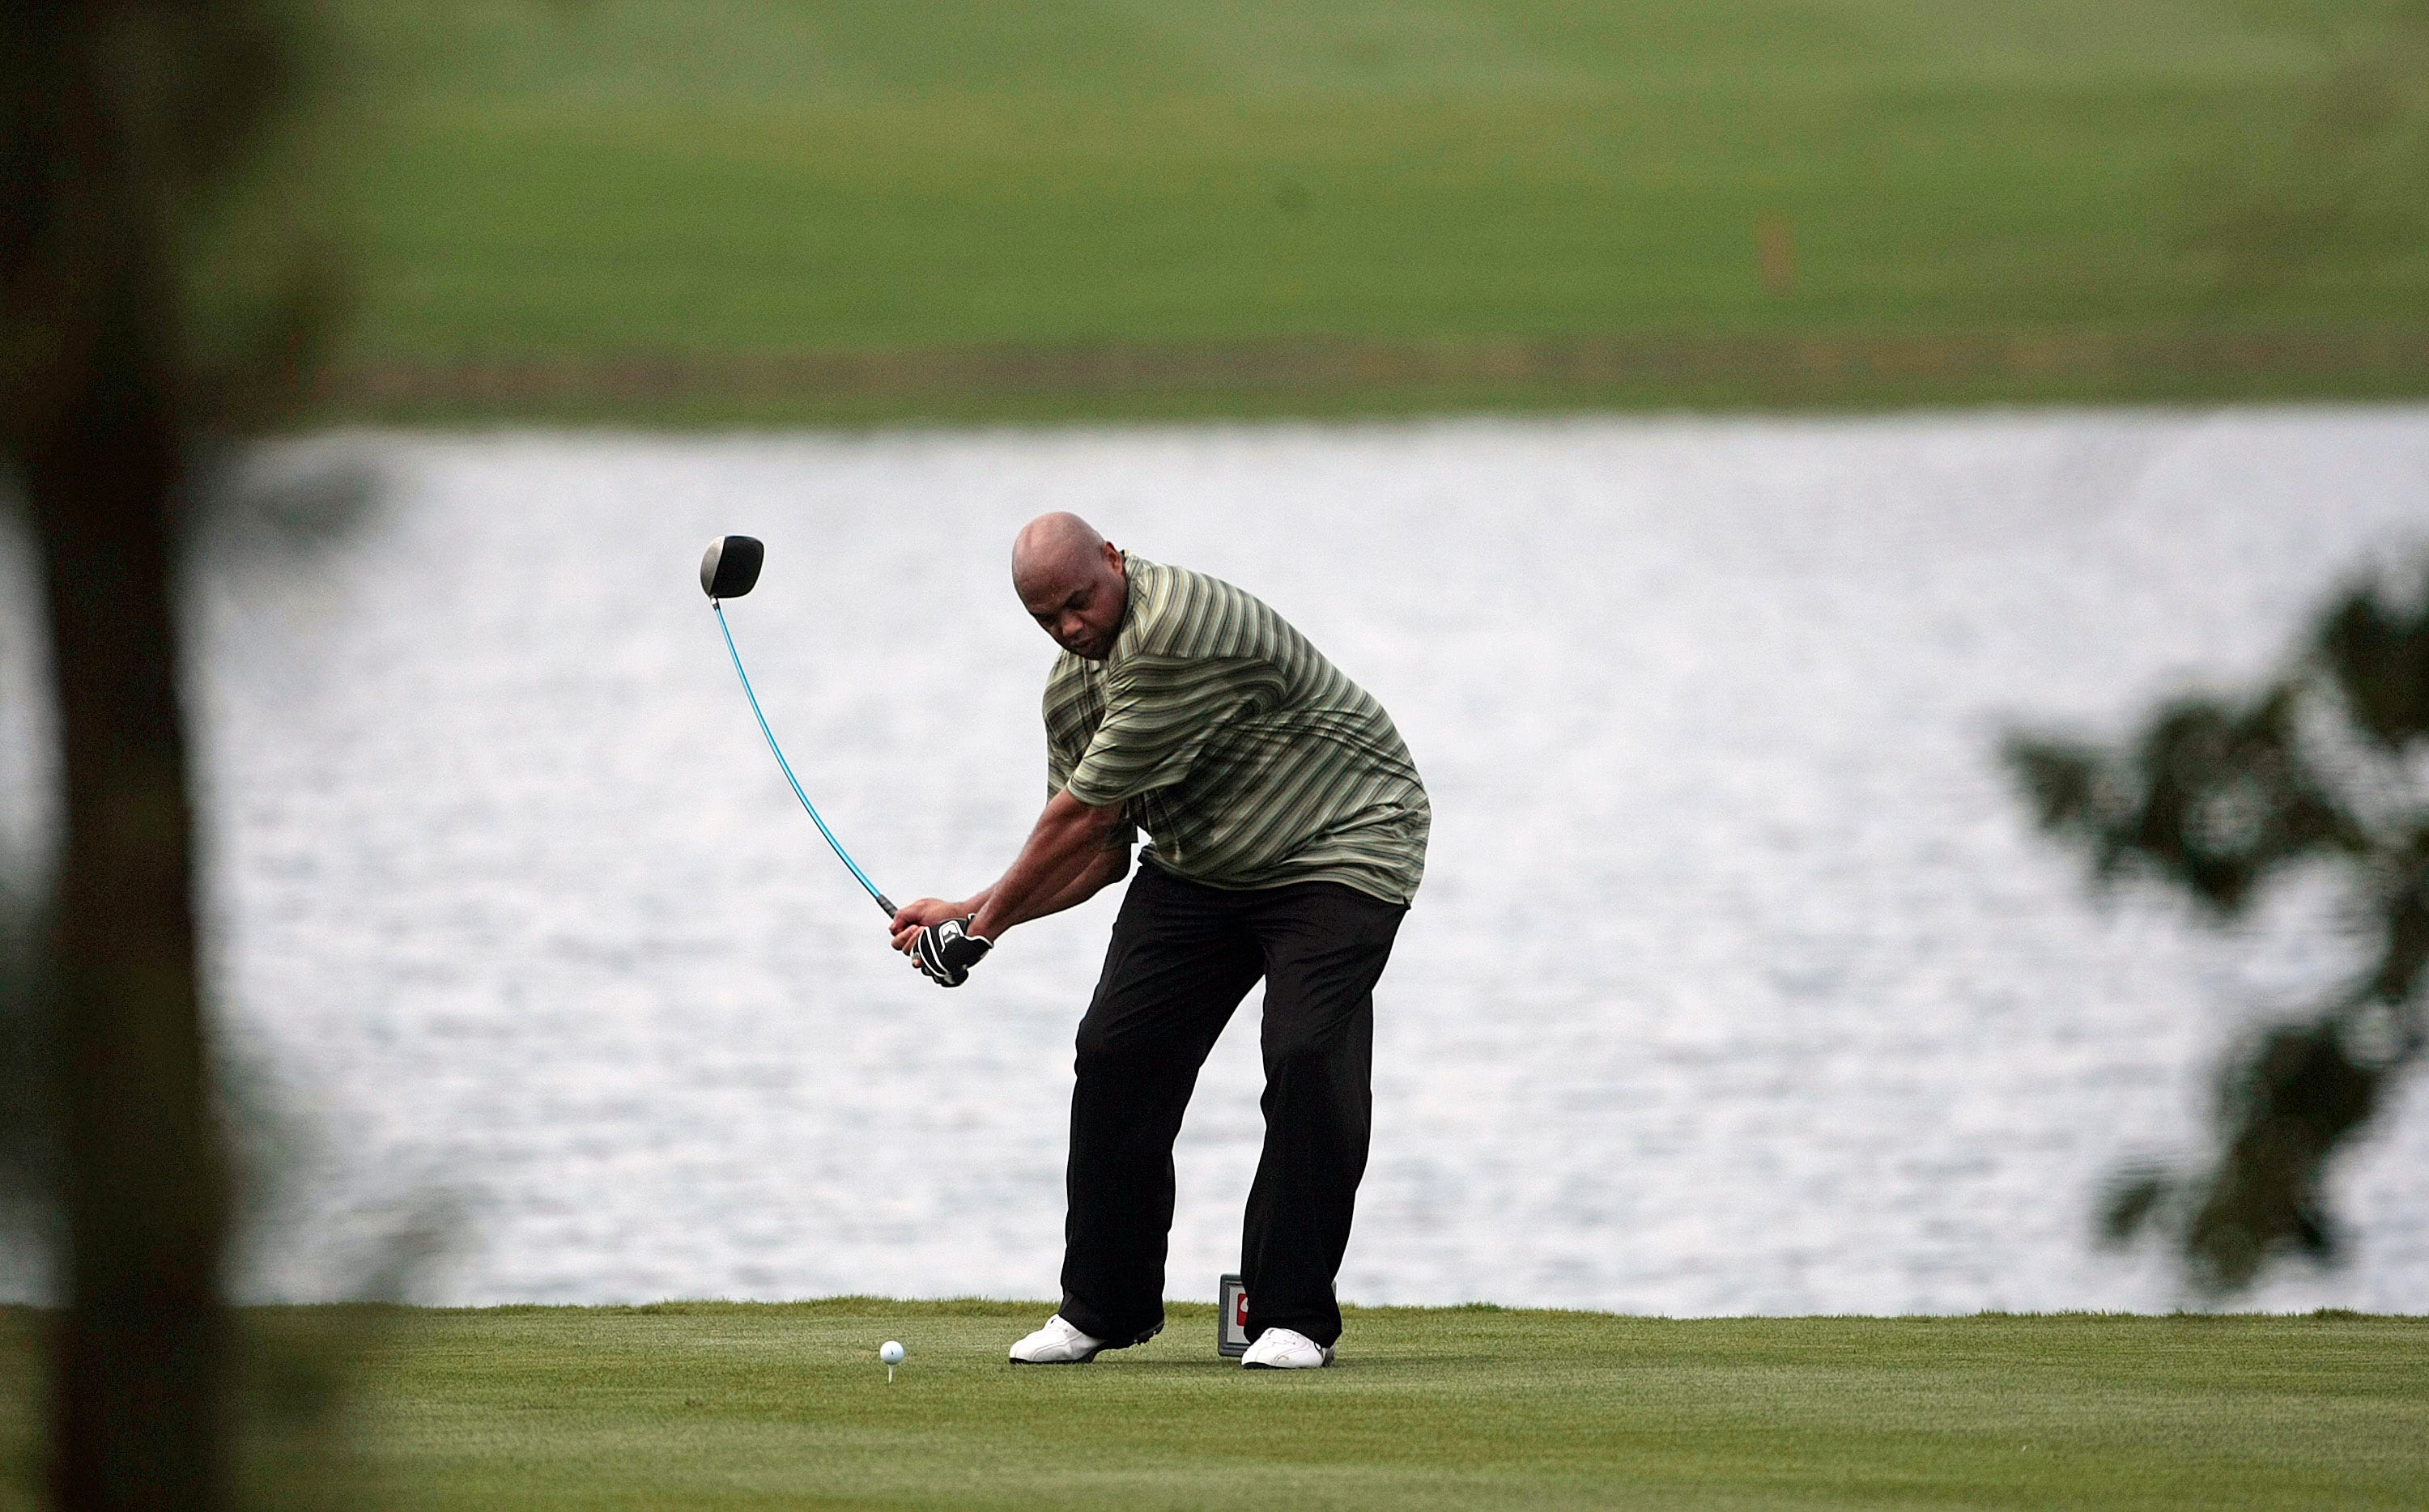 Charles Barkley's golf swing looks improved.